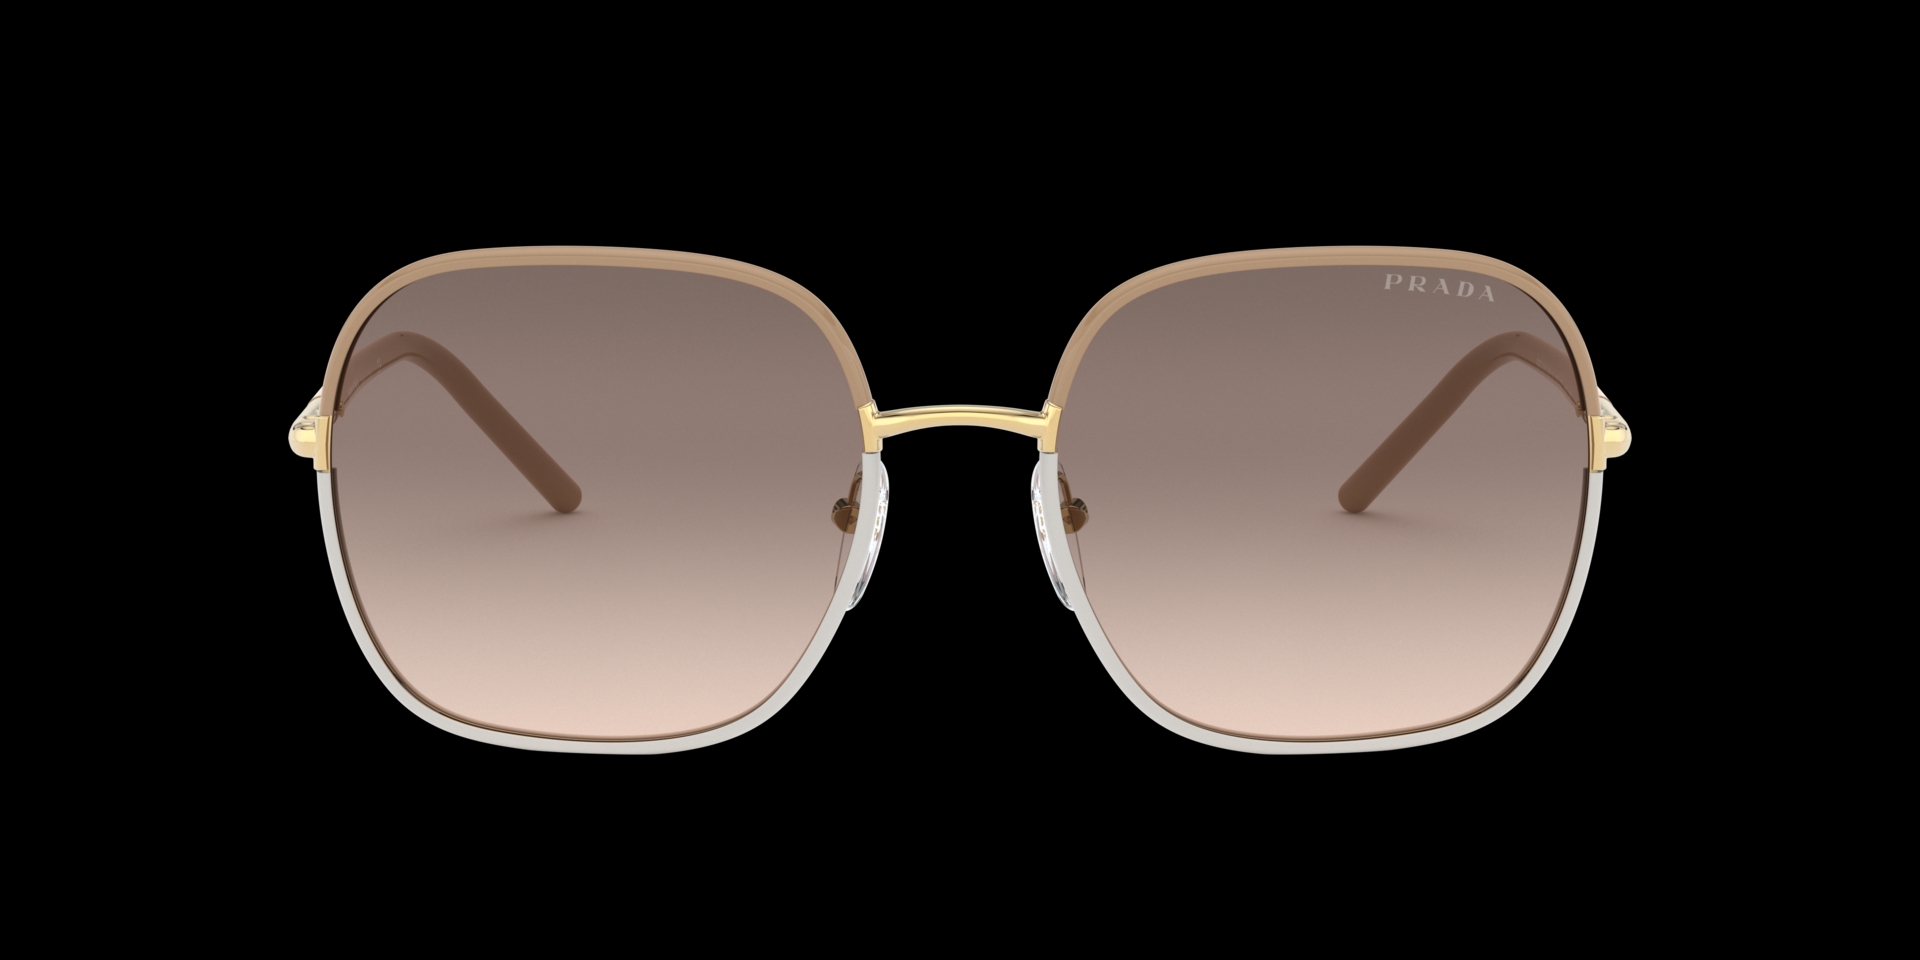 Buy Ray-Ban Unisex Polarized Green Lens Irregular Sunglasses - 0RB3548N at  Amazon.in